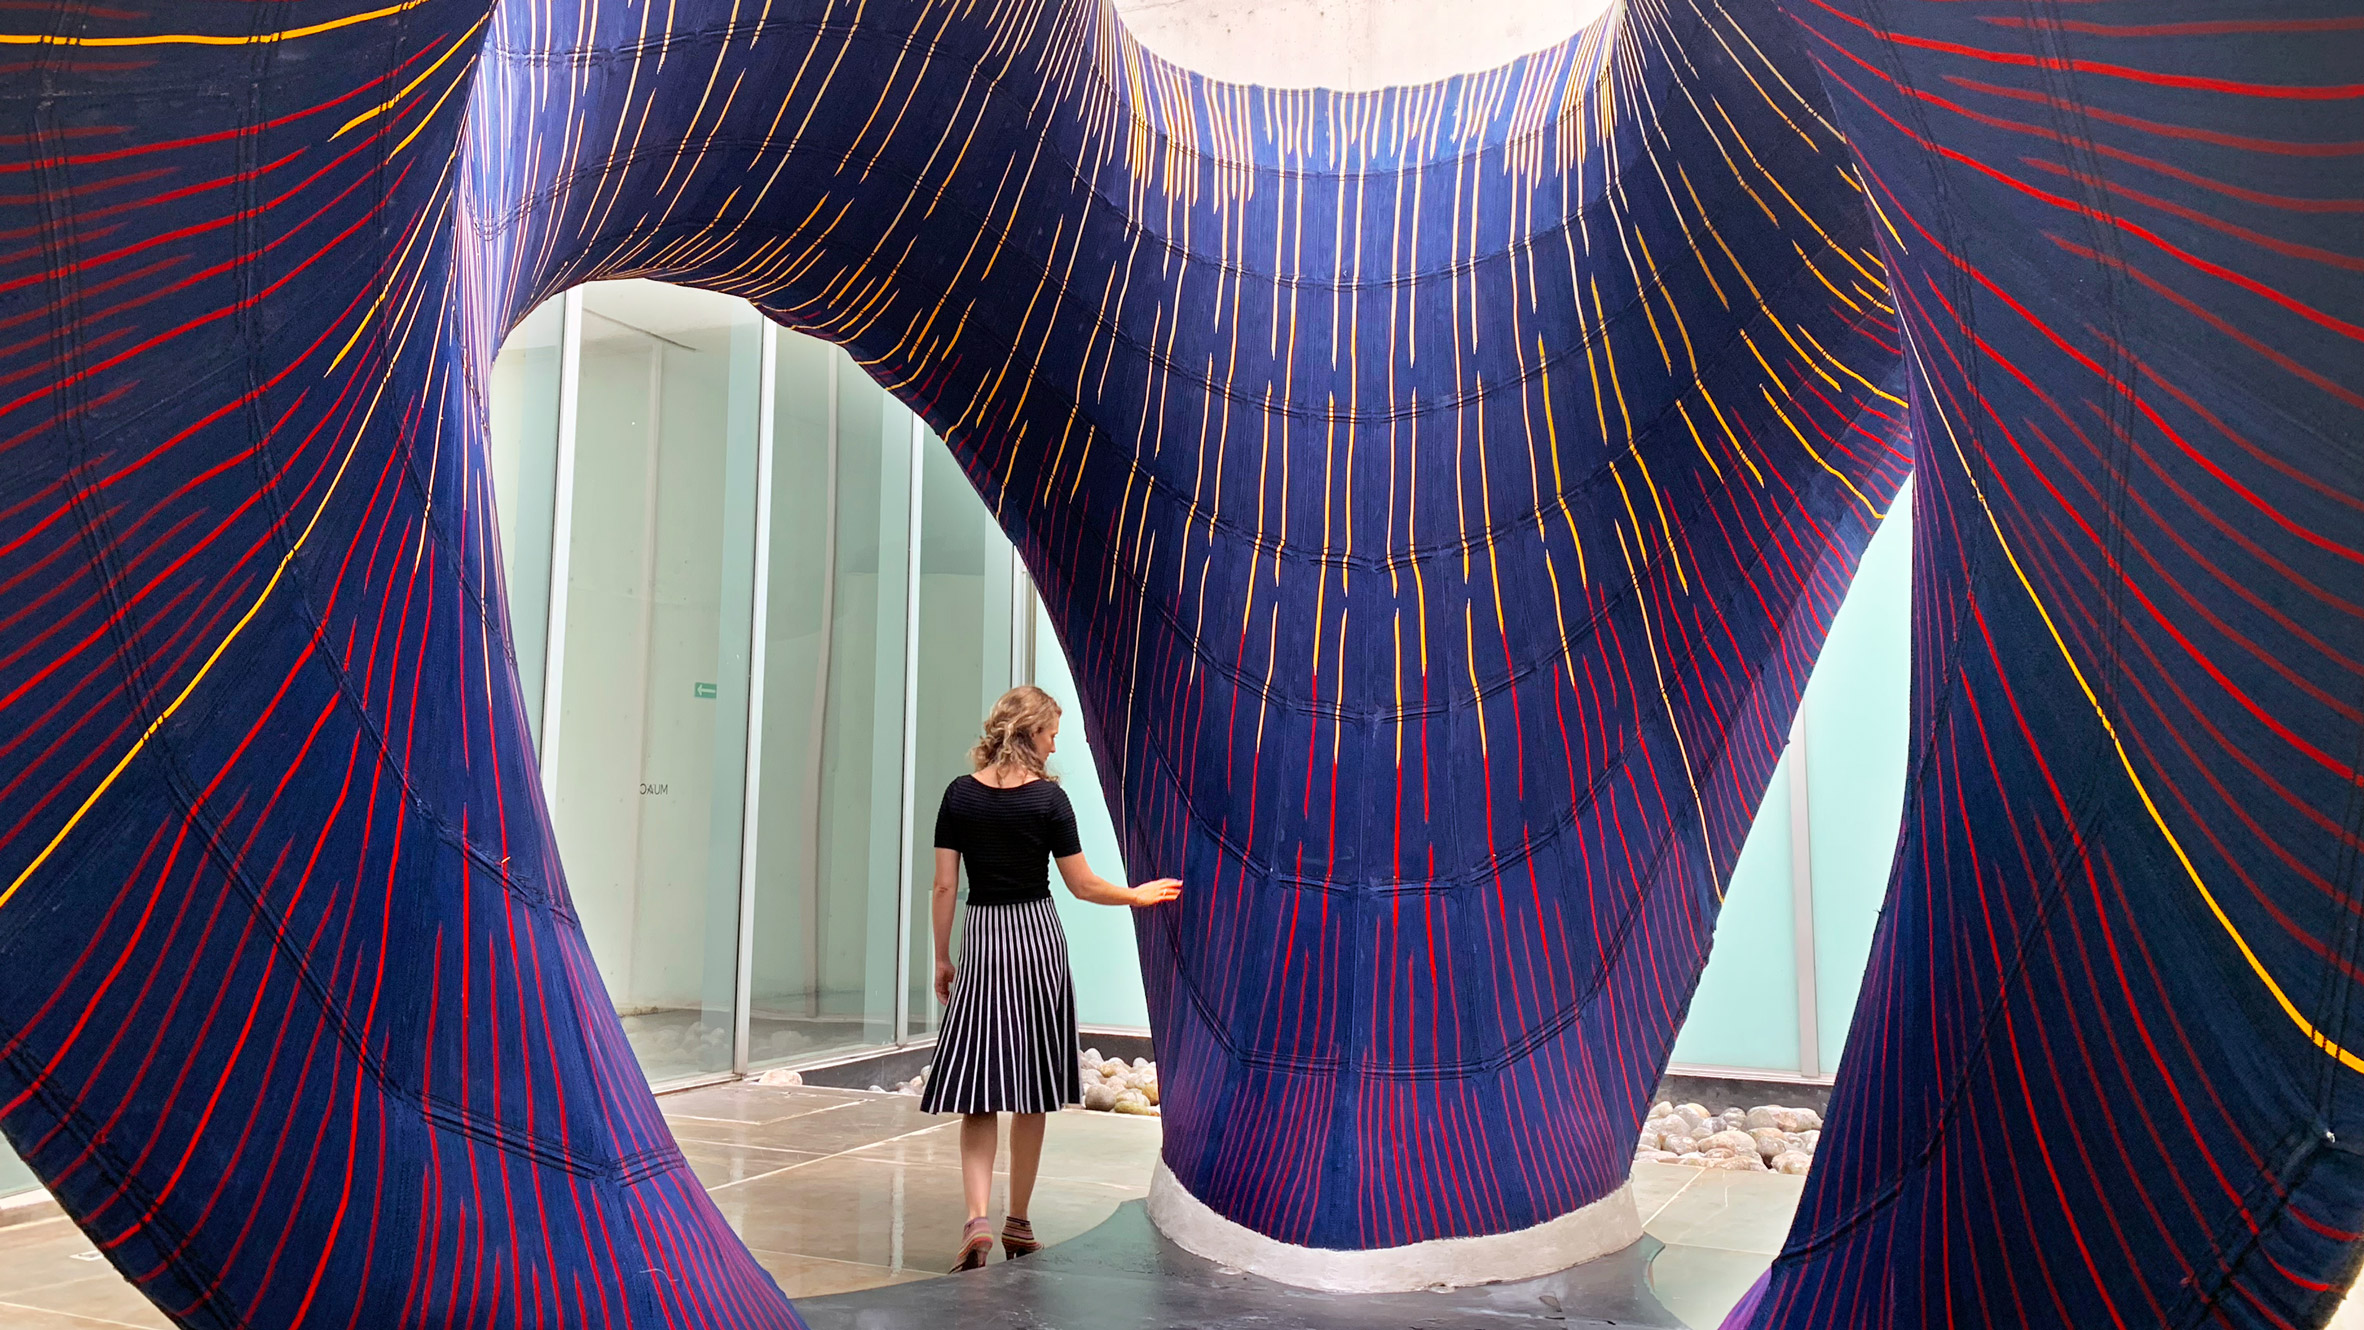 Zaha Hadid Design's monogram bag within 'Louis Vuitton X' exhibition – Zaha  Hadid Architects